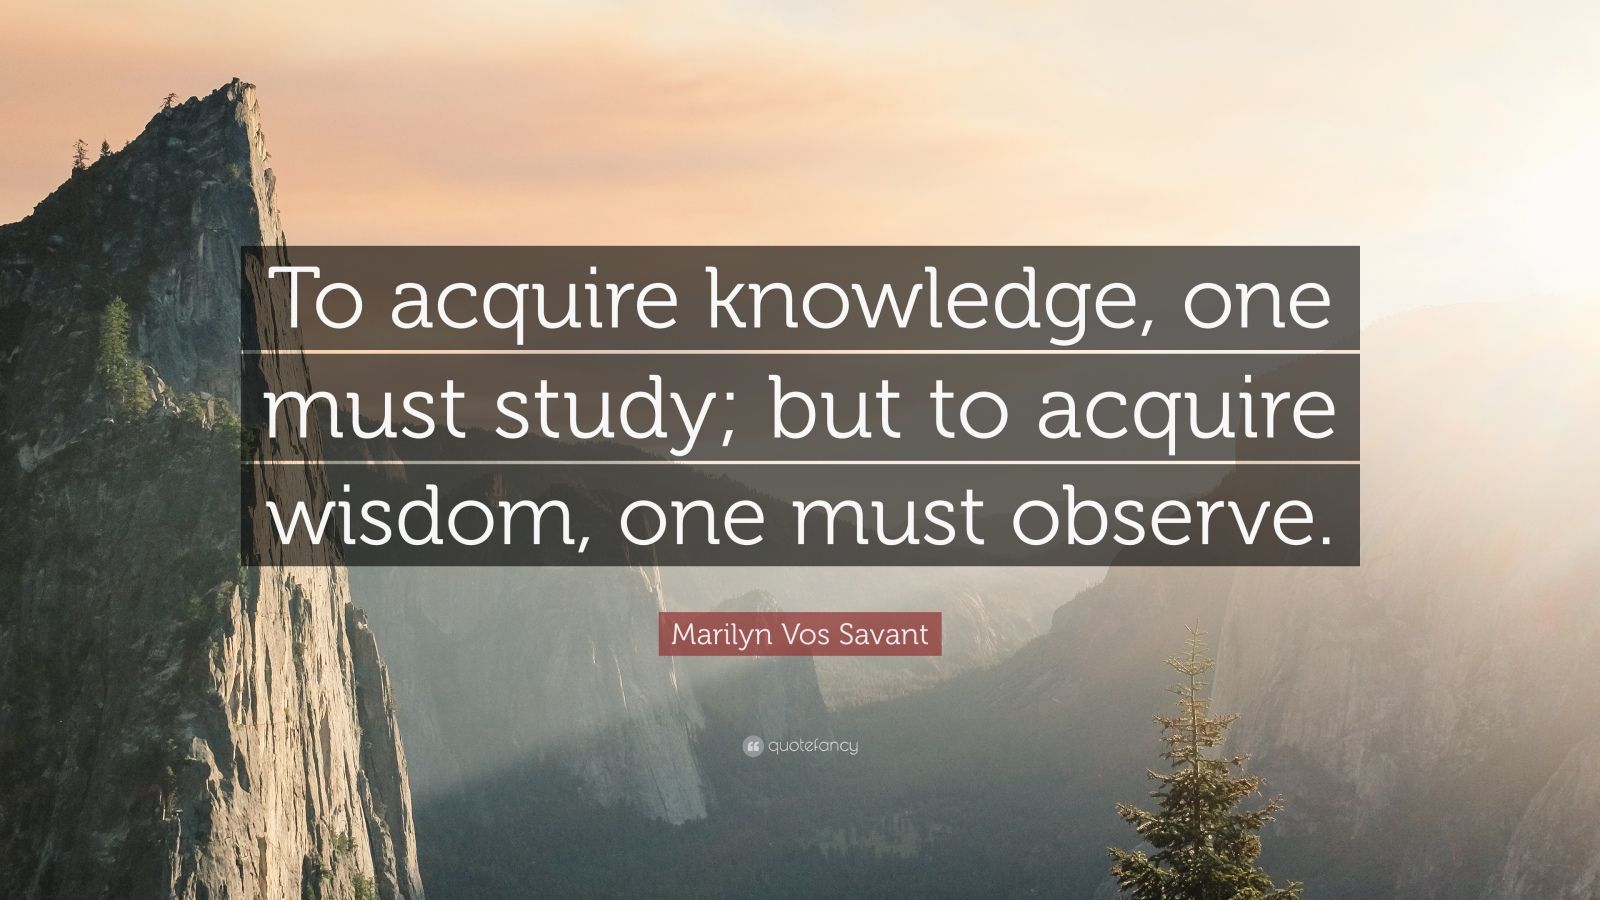 Wisdom Quotes (40 wallpapers) - Quotefancy1600 x 900